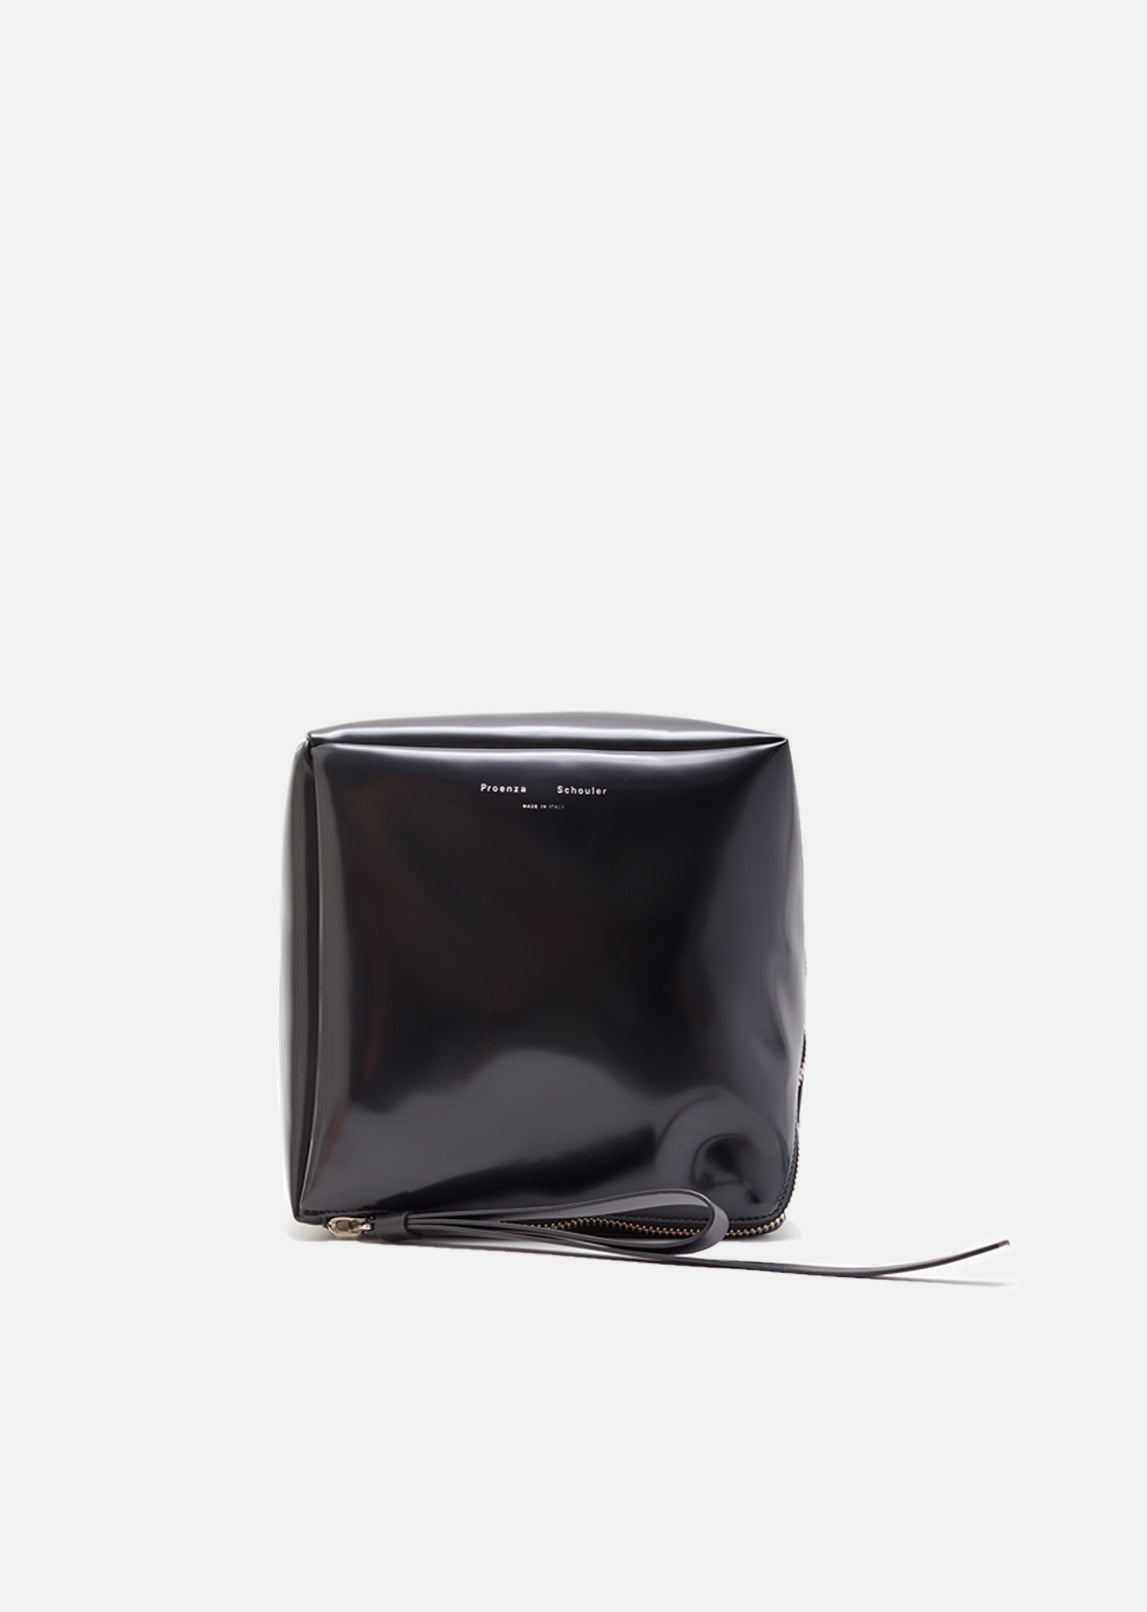 Cuebe Cube Bag Black